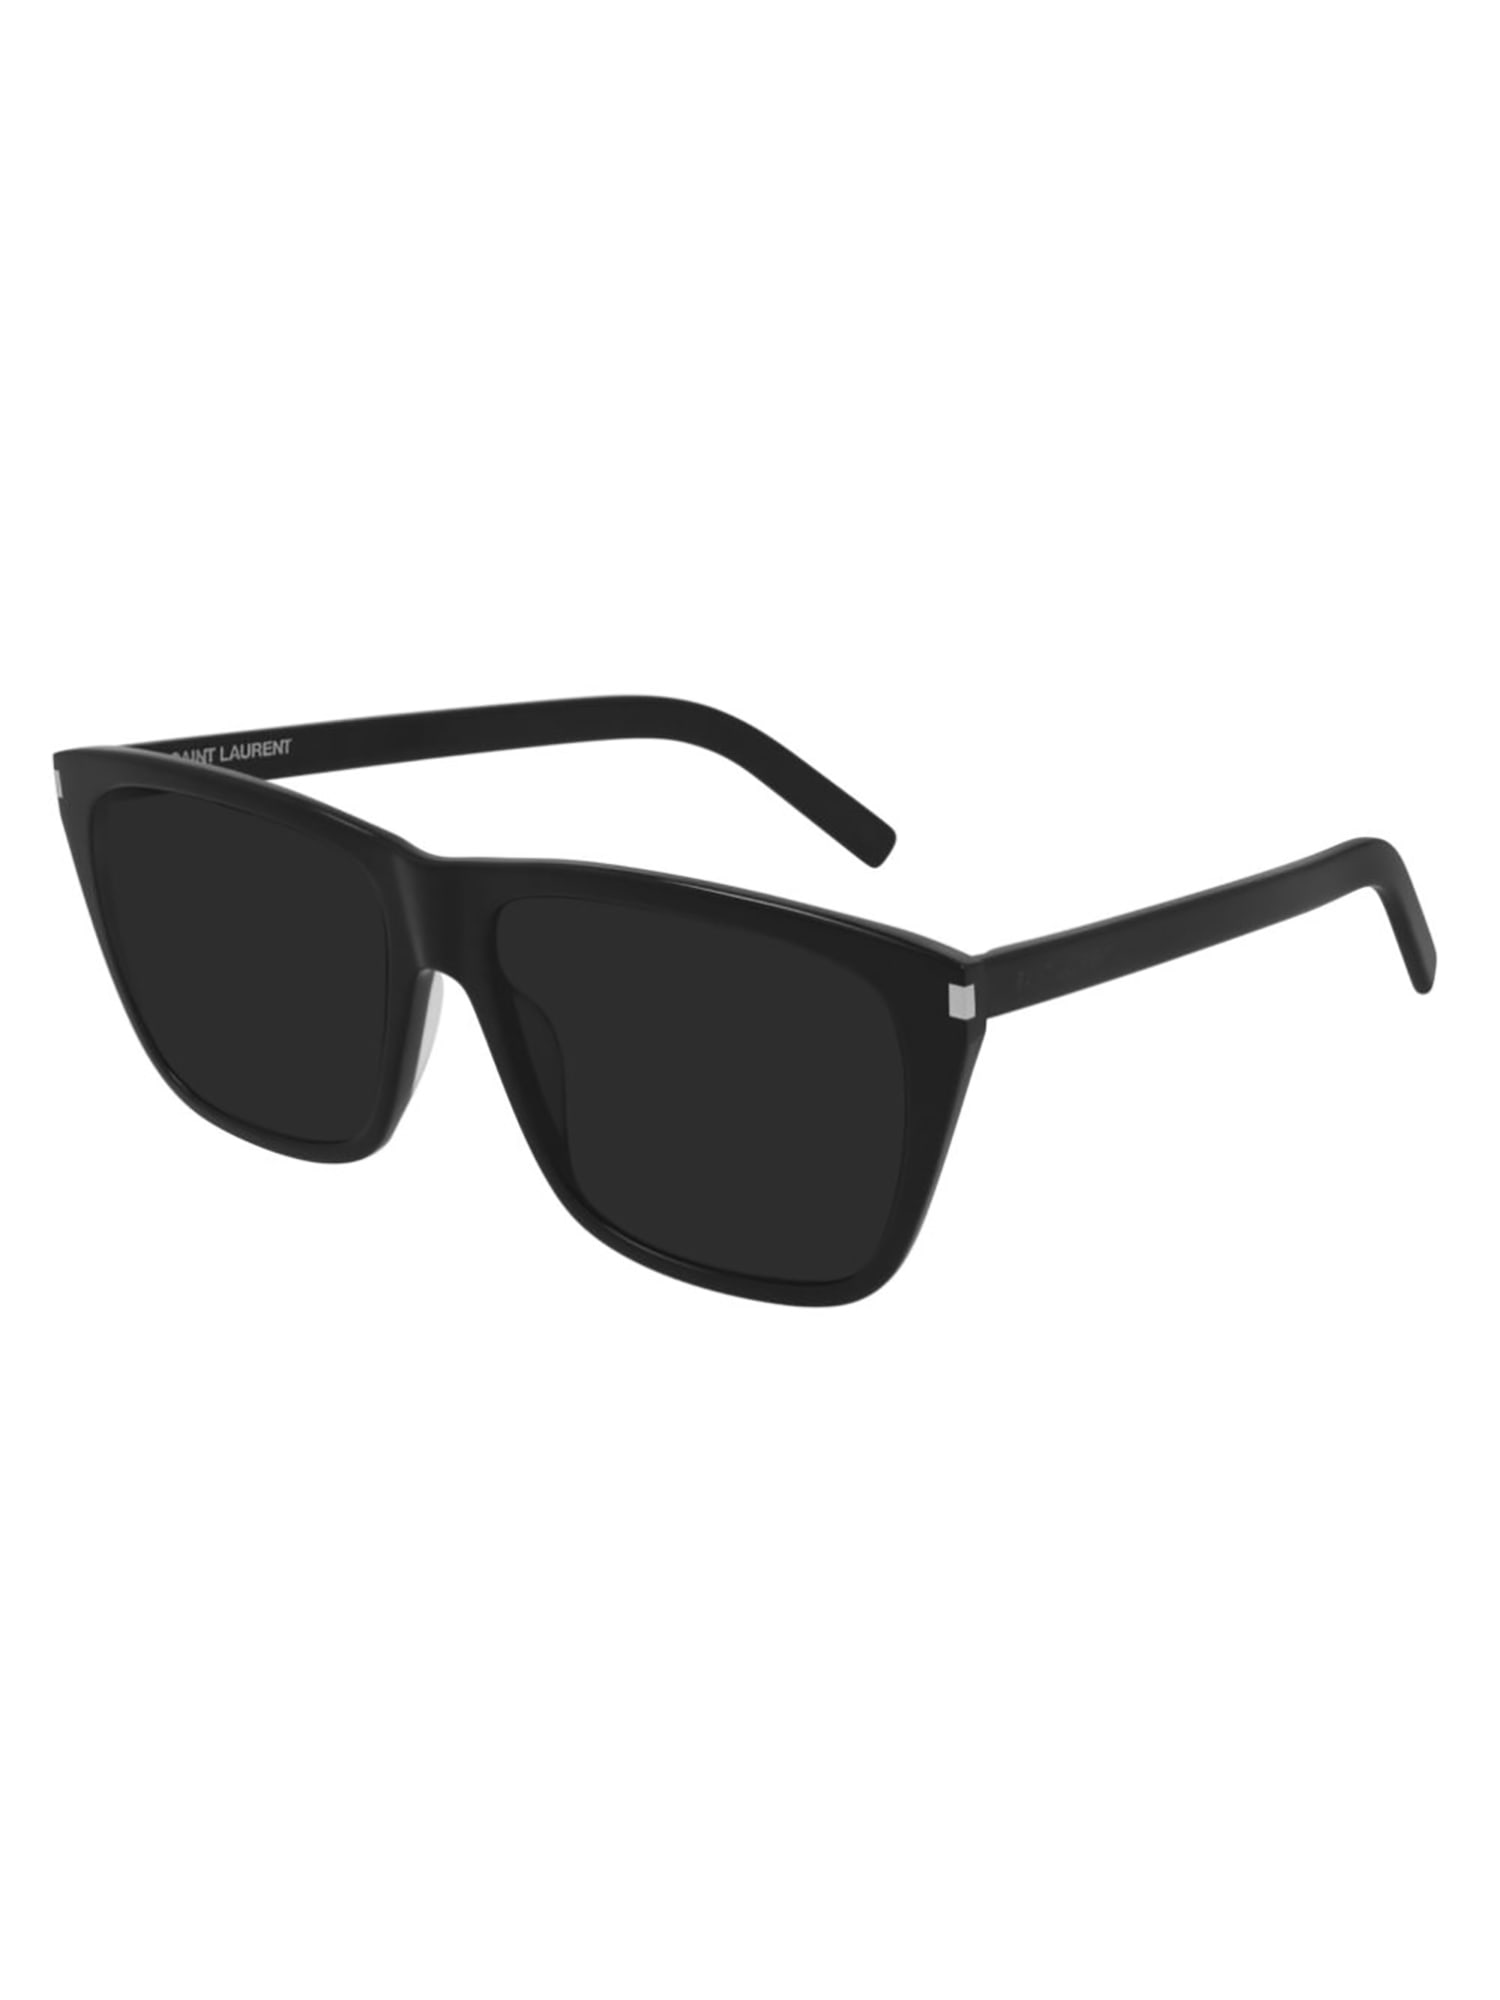 Saint Laurent SL 431 SLIM Sunglasses